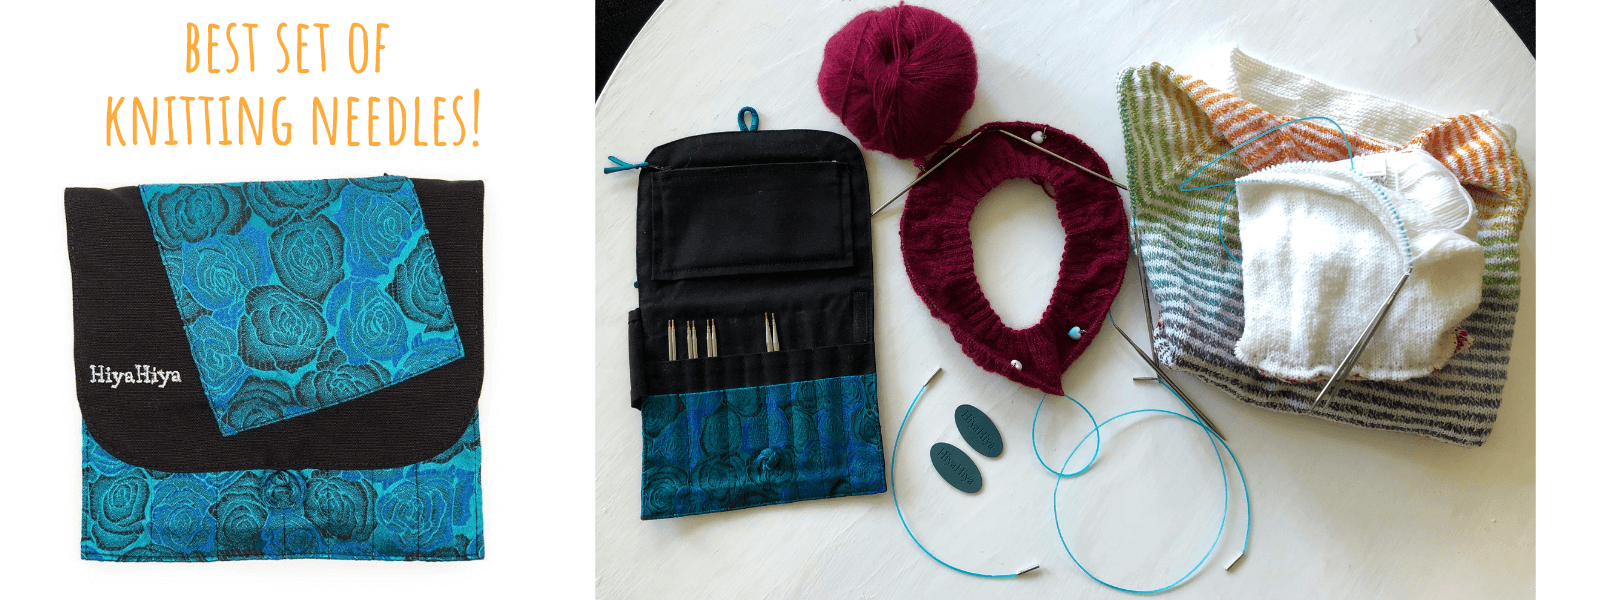 Hiya Hiya Knitting Needle Review - Interchangeable Set